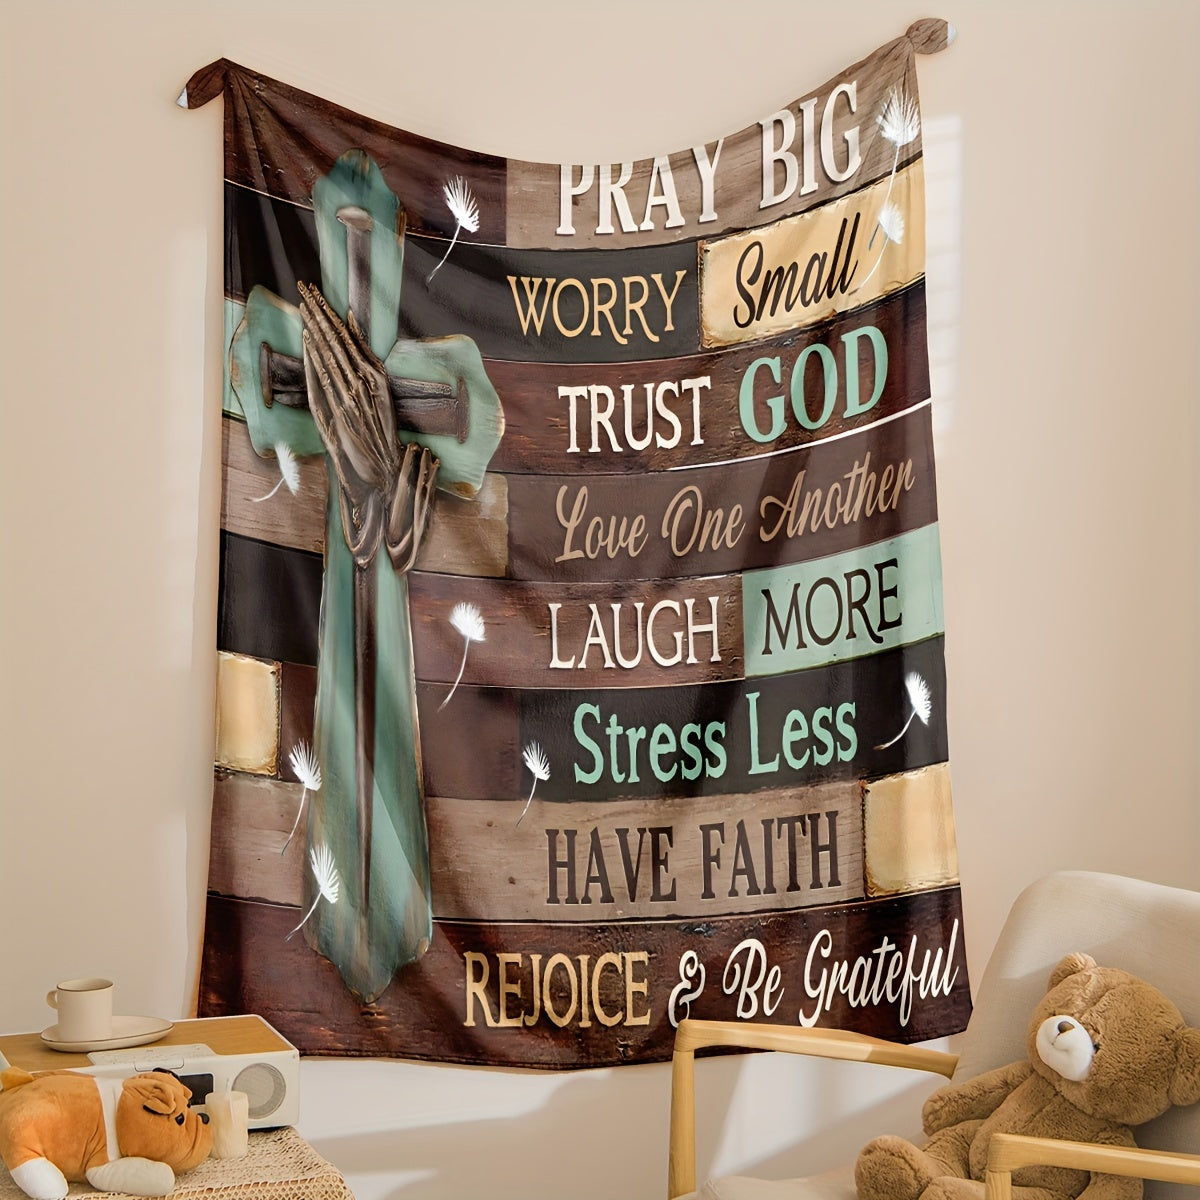 Pray Big Rejoice & Be Grateful Christian Flannel Blanket claimedbygoddesigns